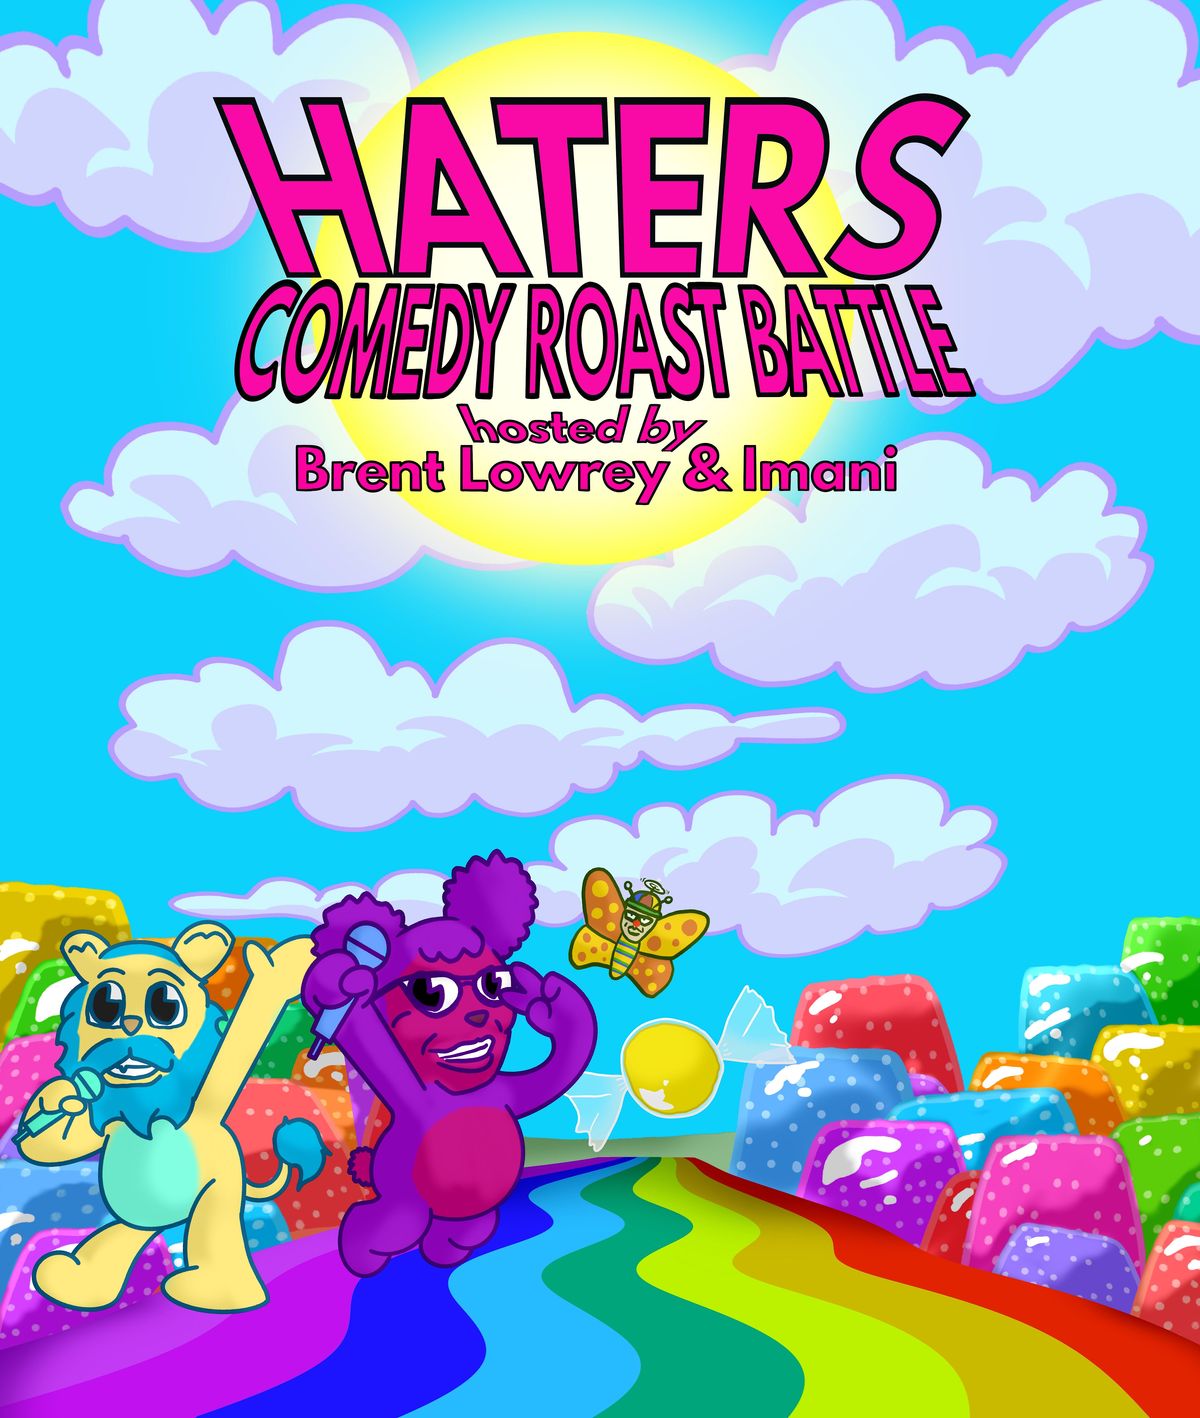 HATERS: Comedy Roast Battle